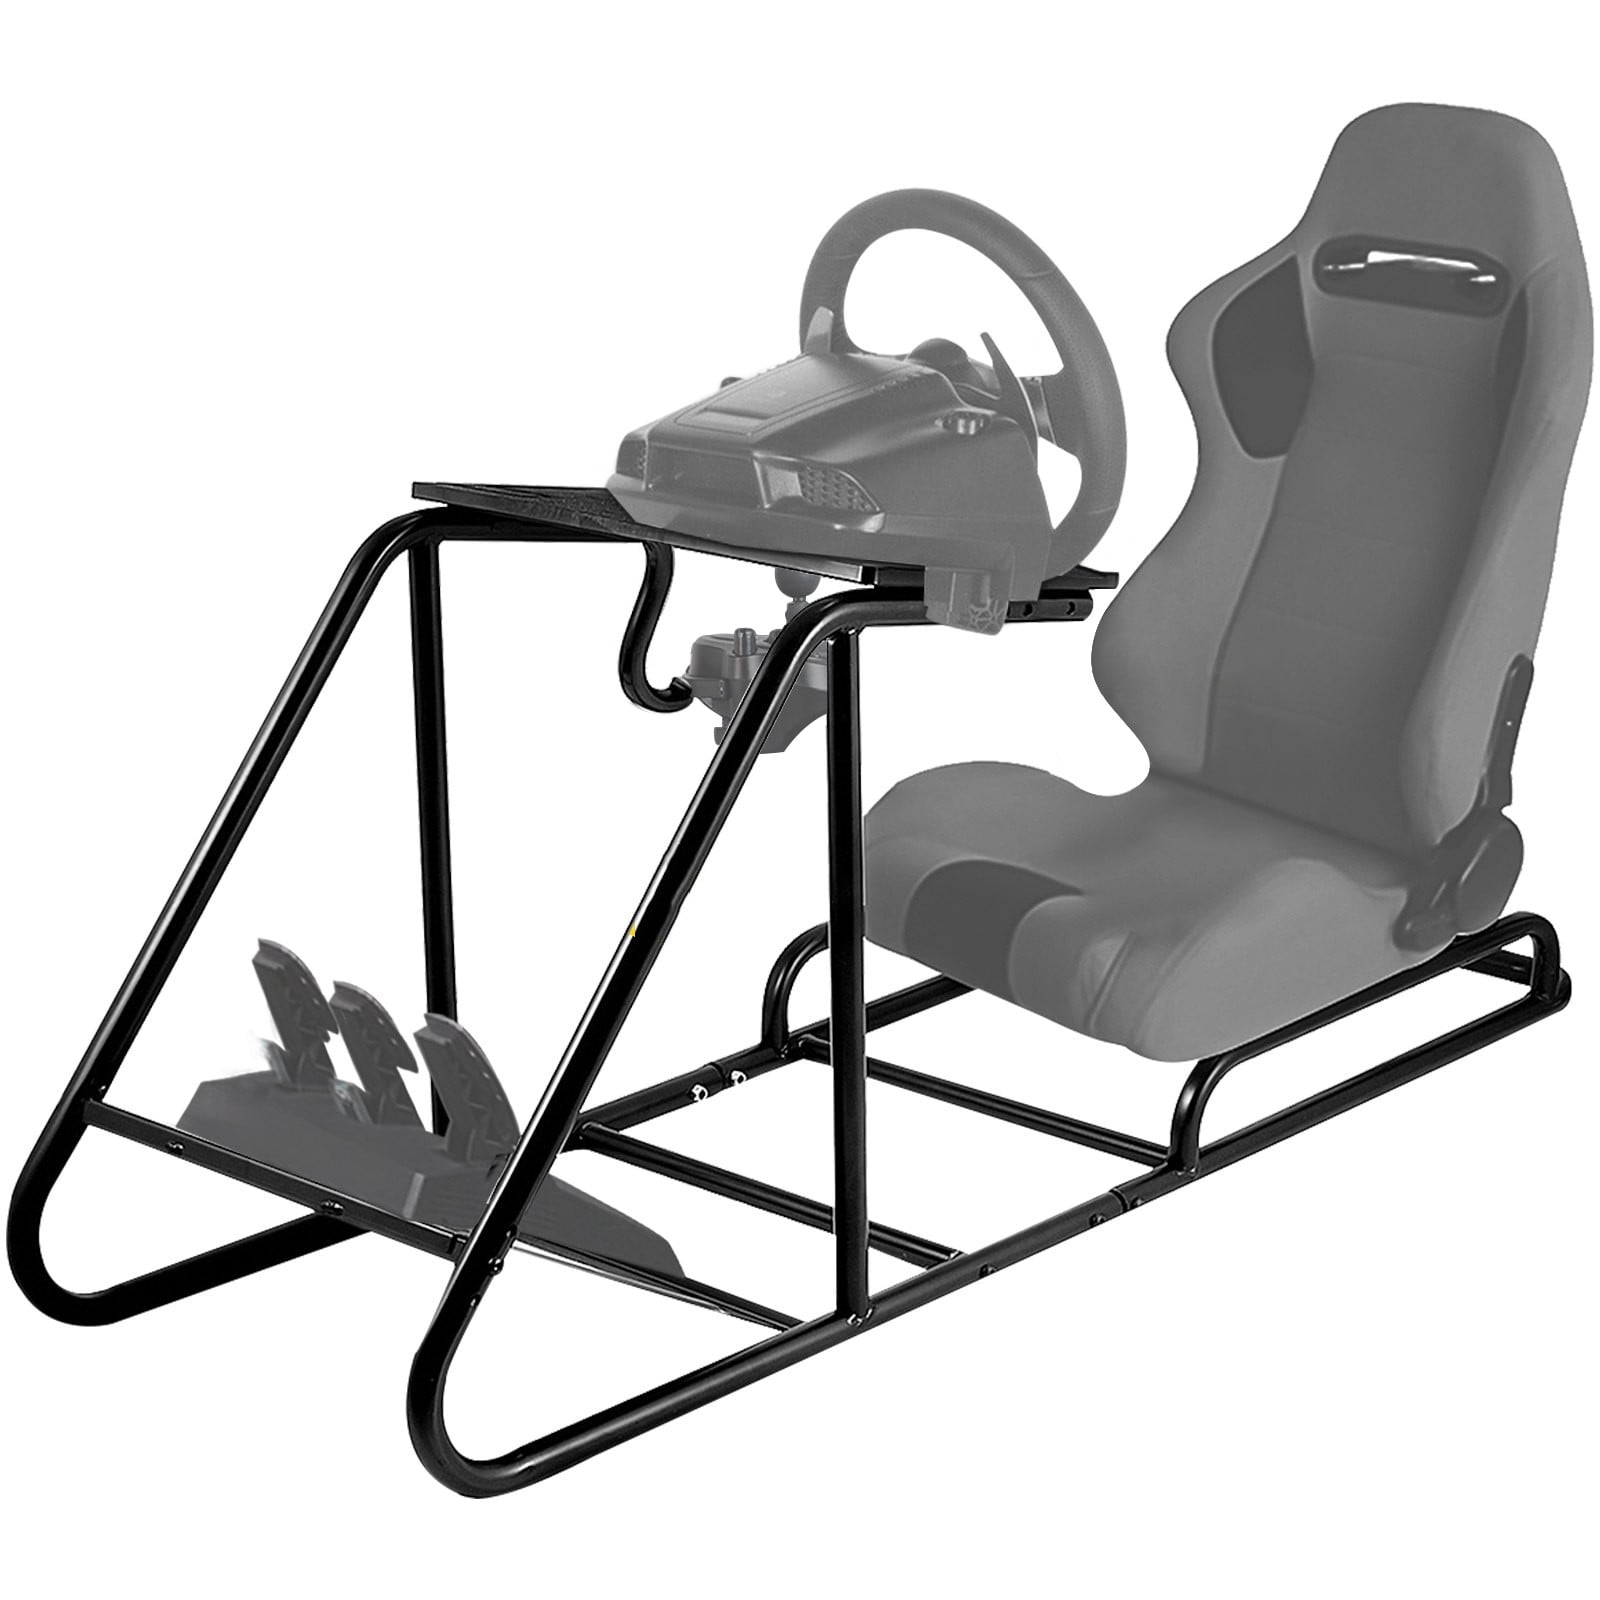 Verspilling klauw buiten gebruik BENTISM Video Gaming Seat Driving Race Chair Simulator Cockpit For PS3 PS4  XBOX - Walmart.com